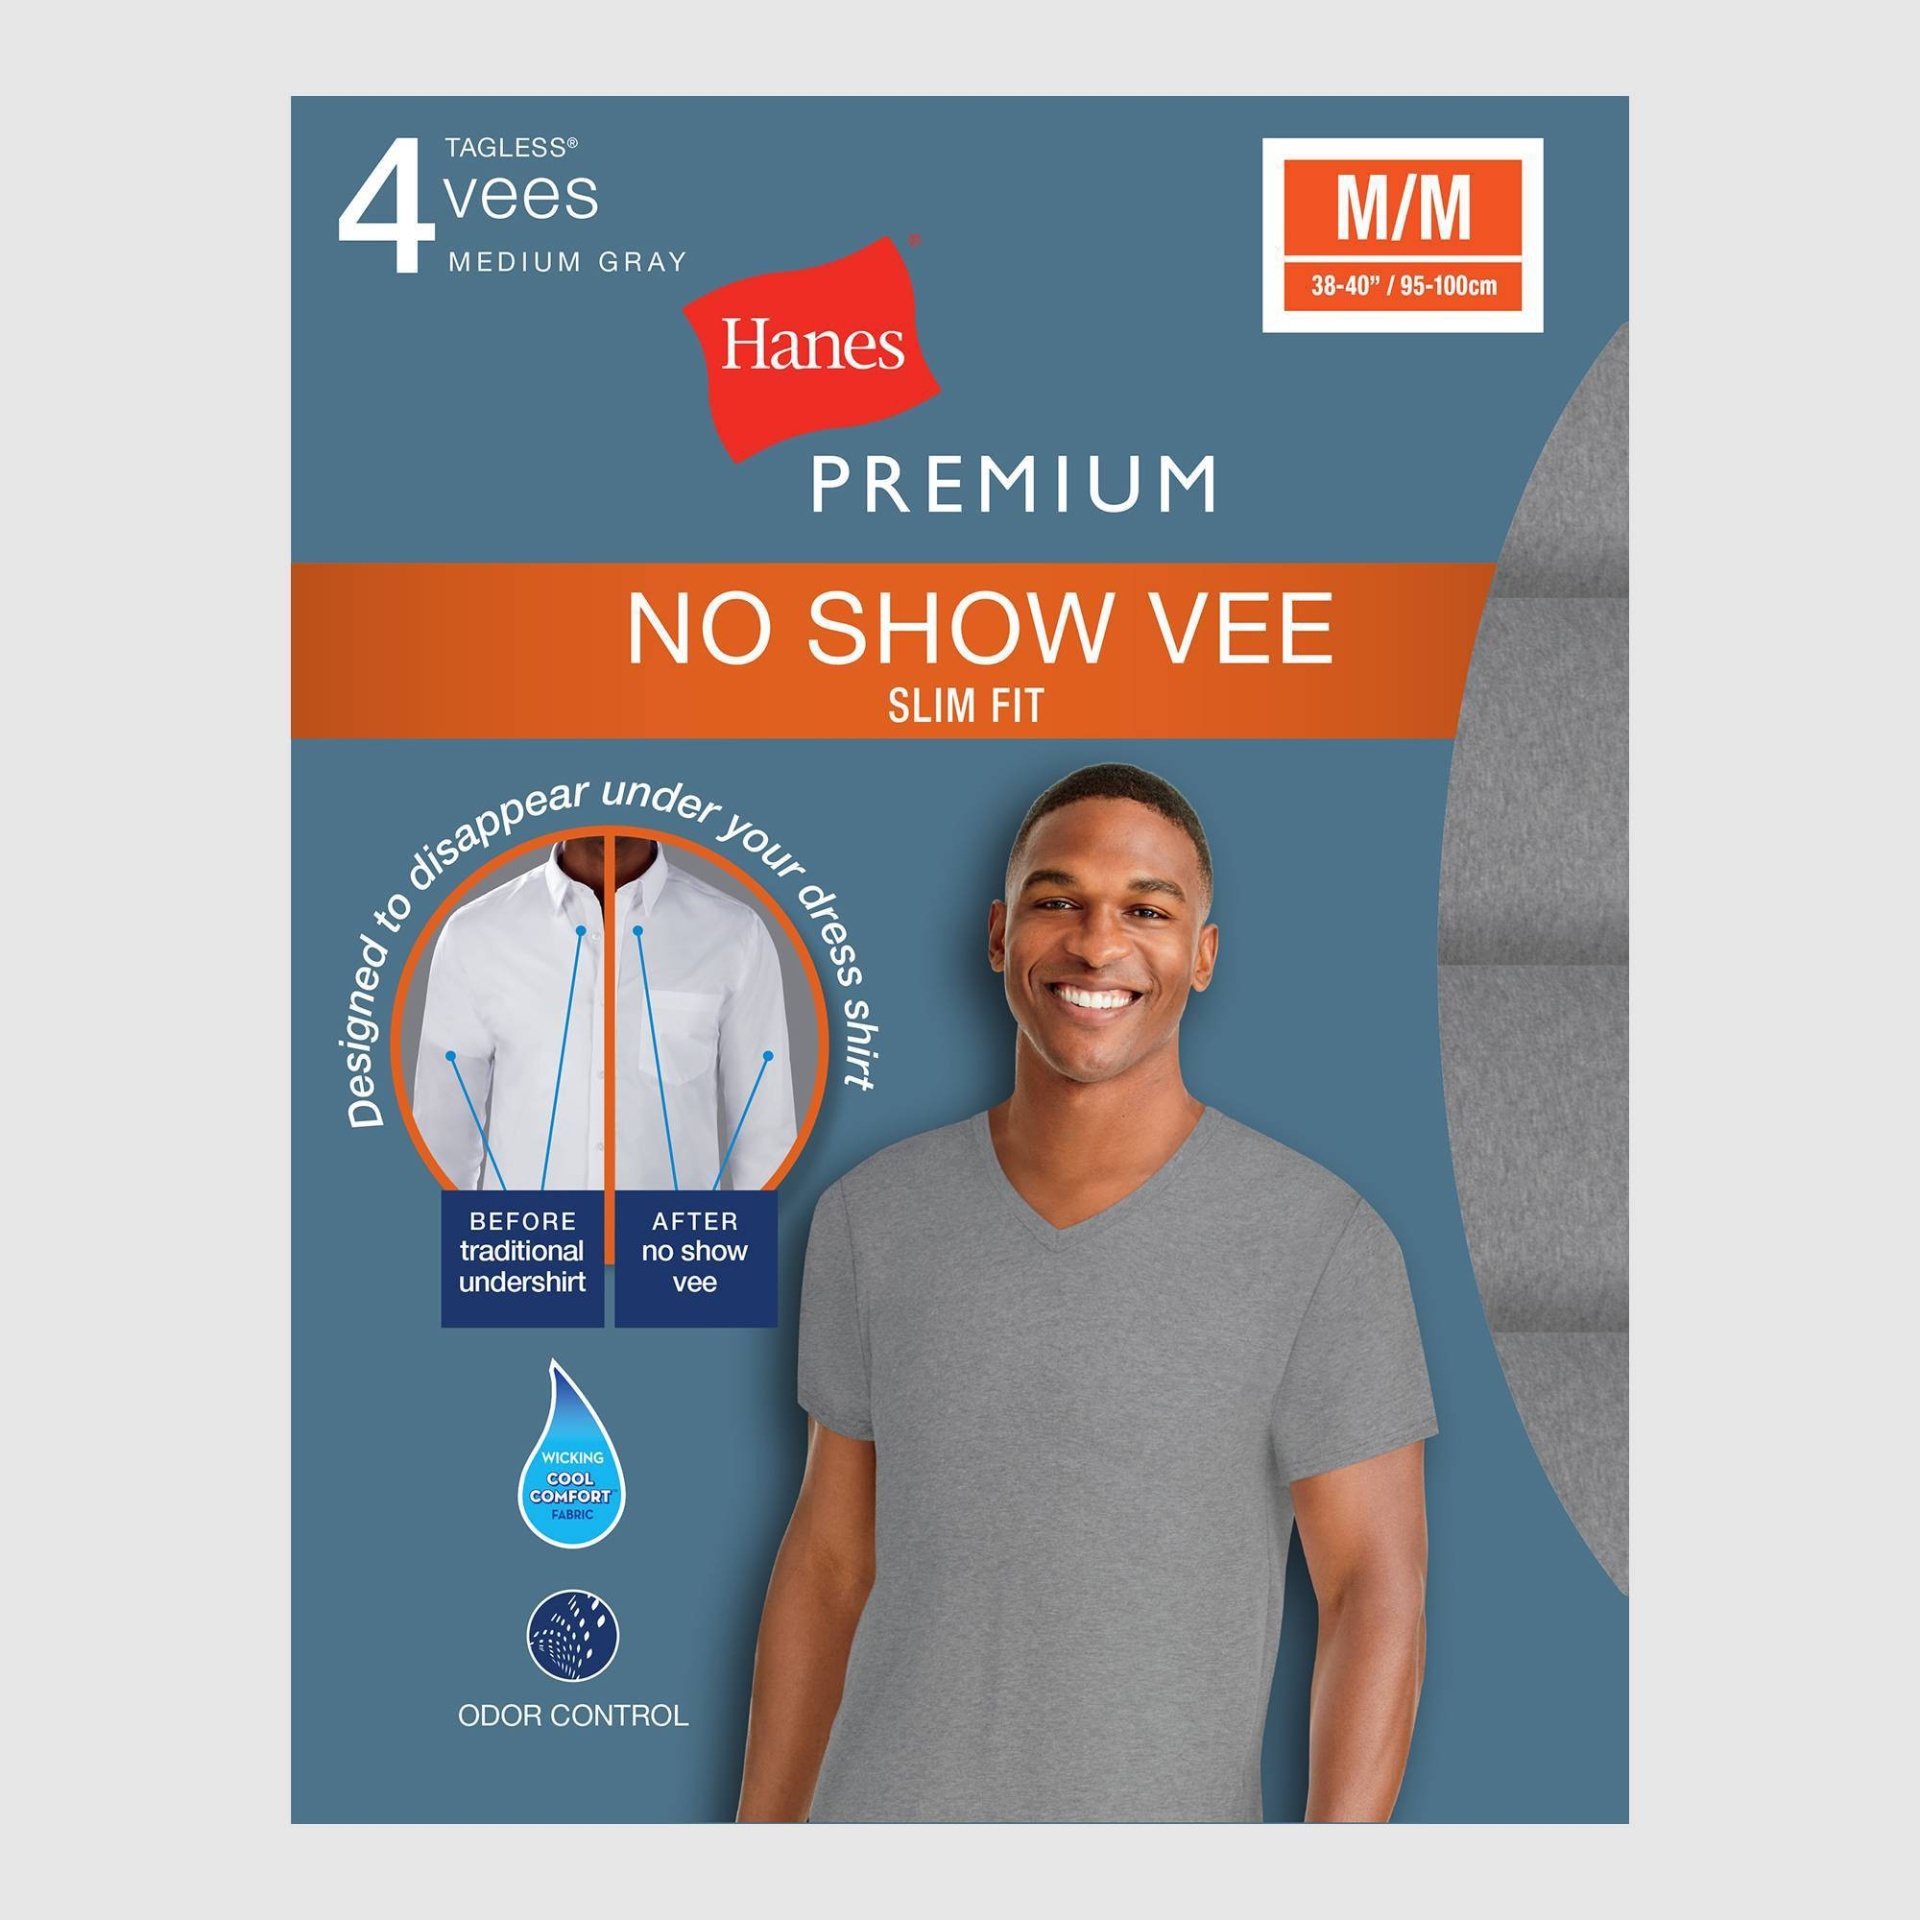 Hanes Premium Men's Slim Fit V-Neck T-Shirt Undershirt With